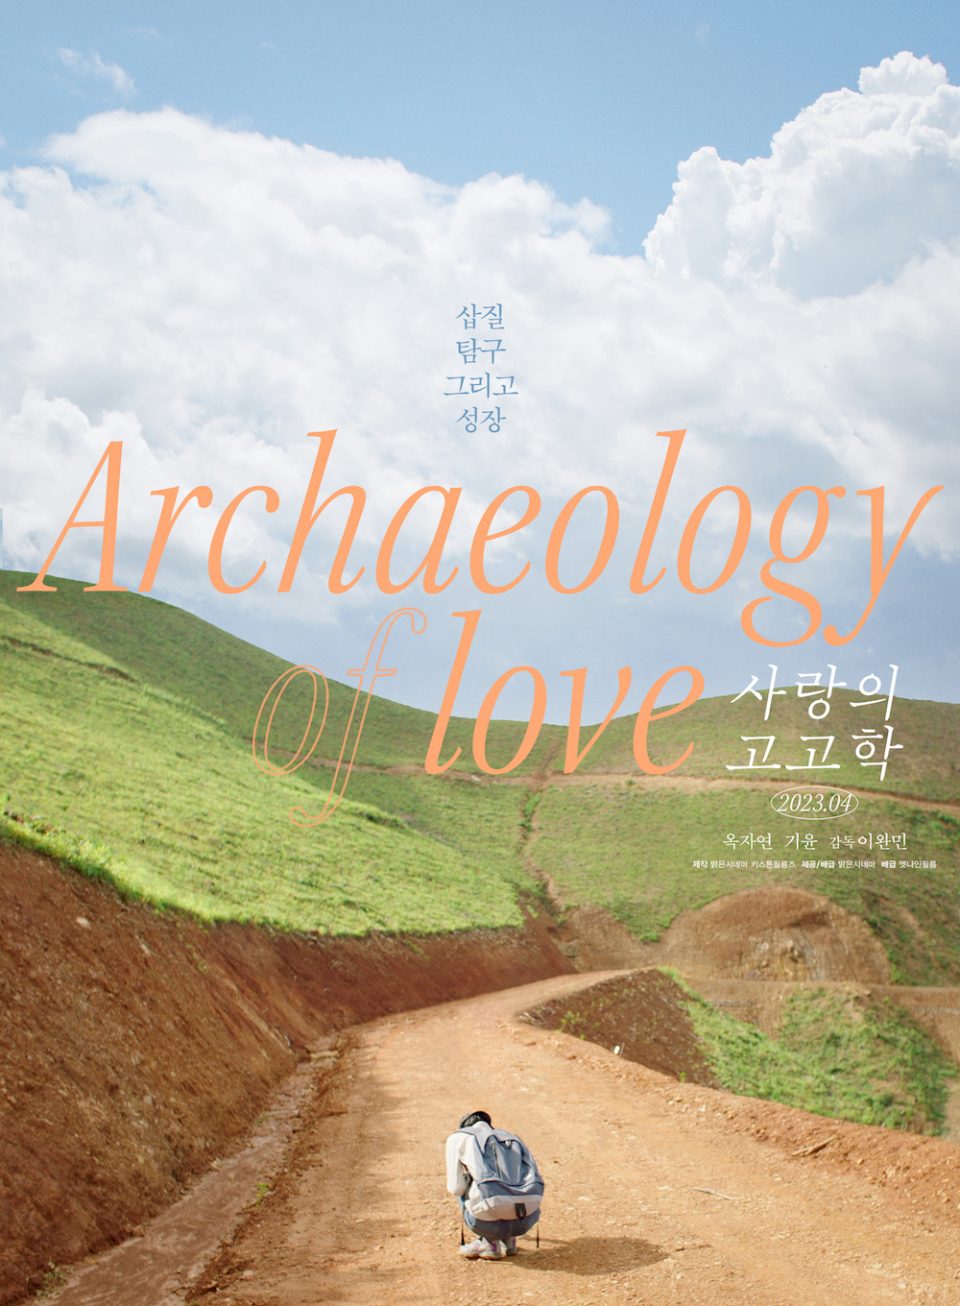 Archaeologyoflove